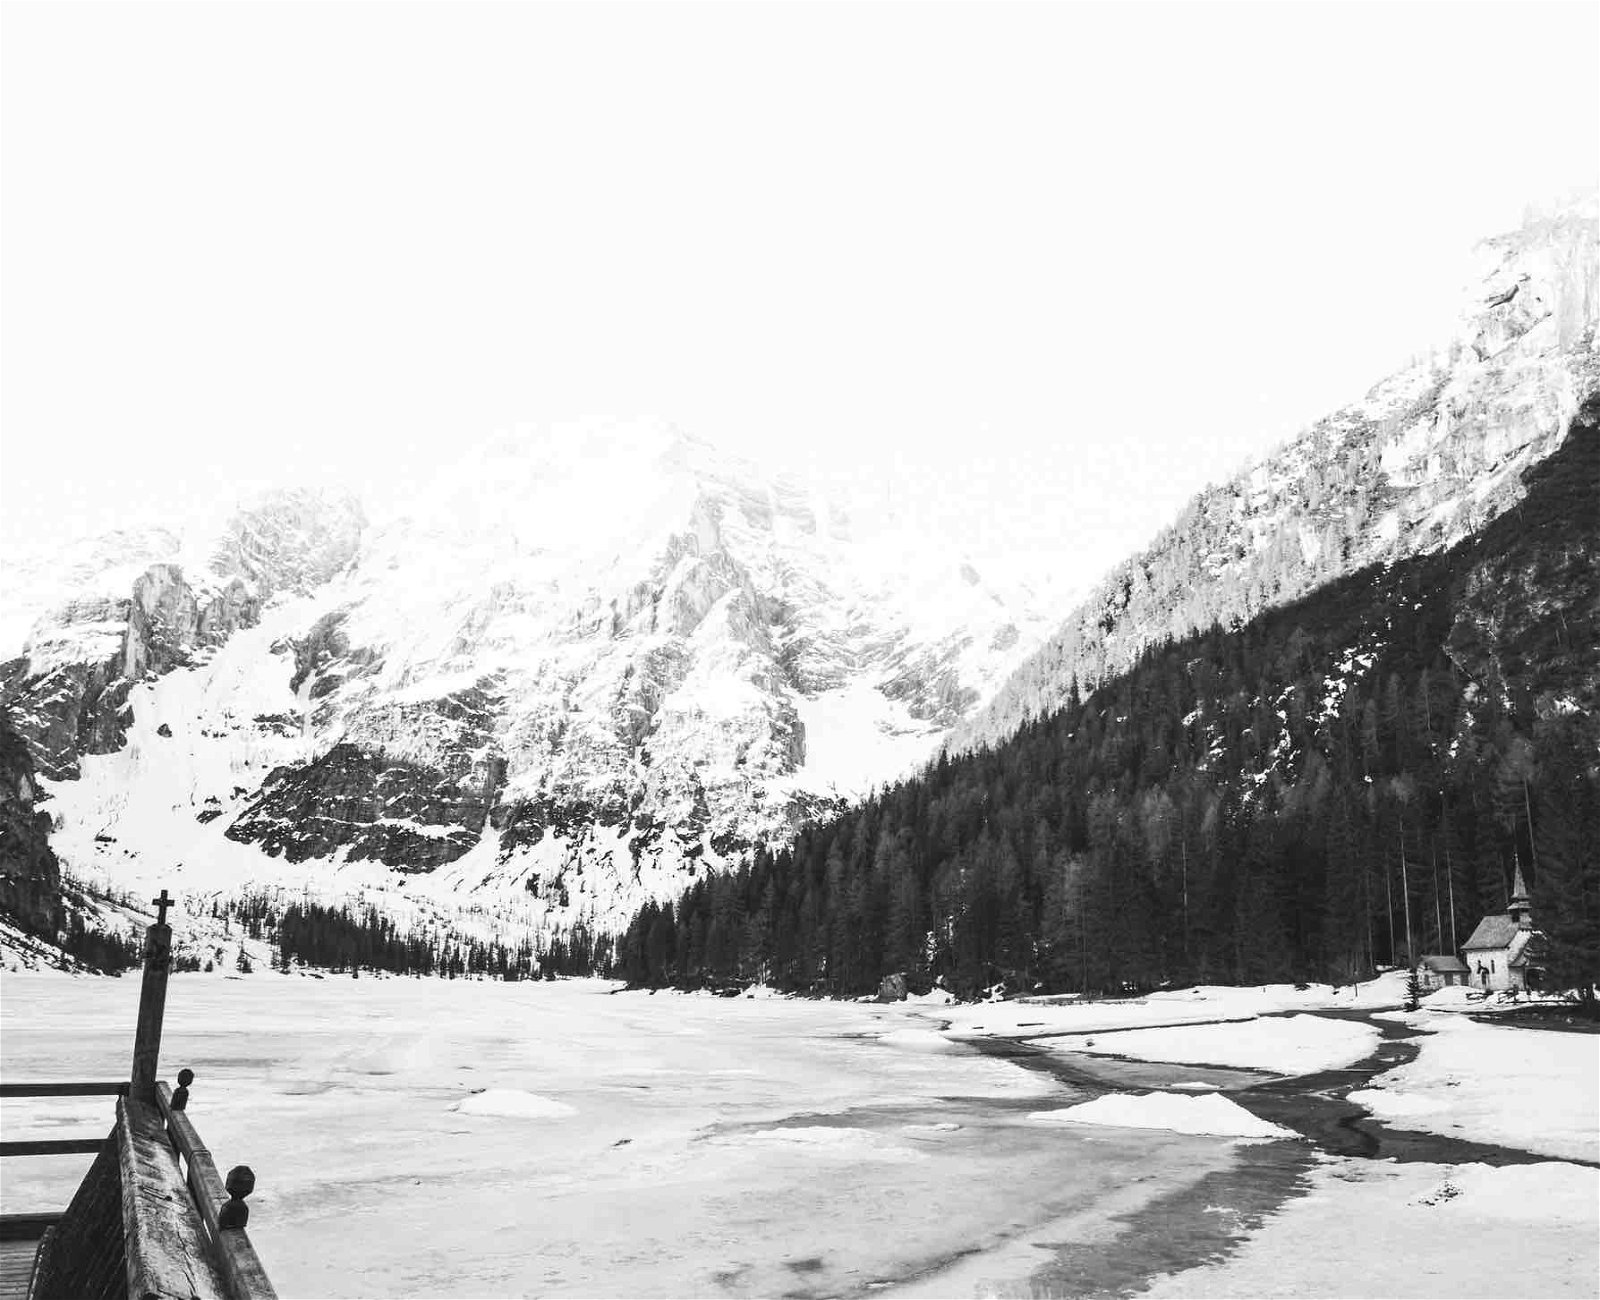 overexposed black and white landscape shot.